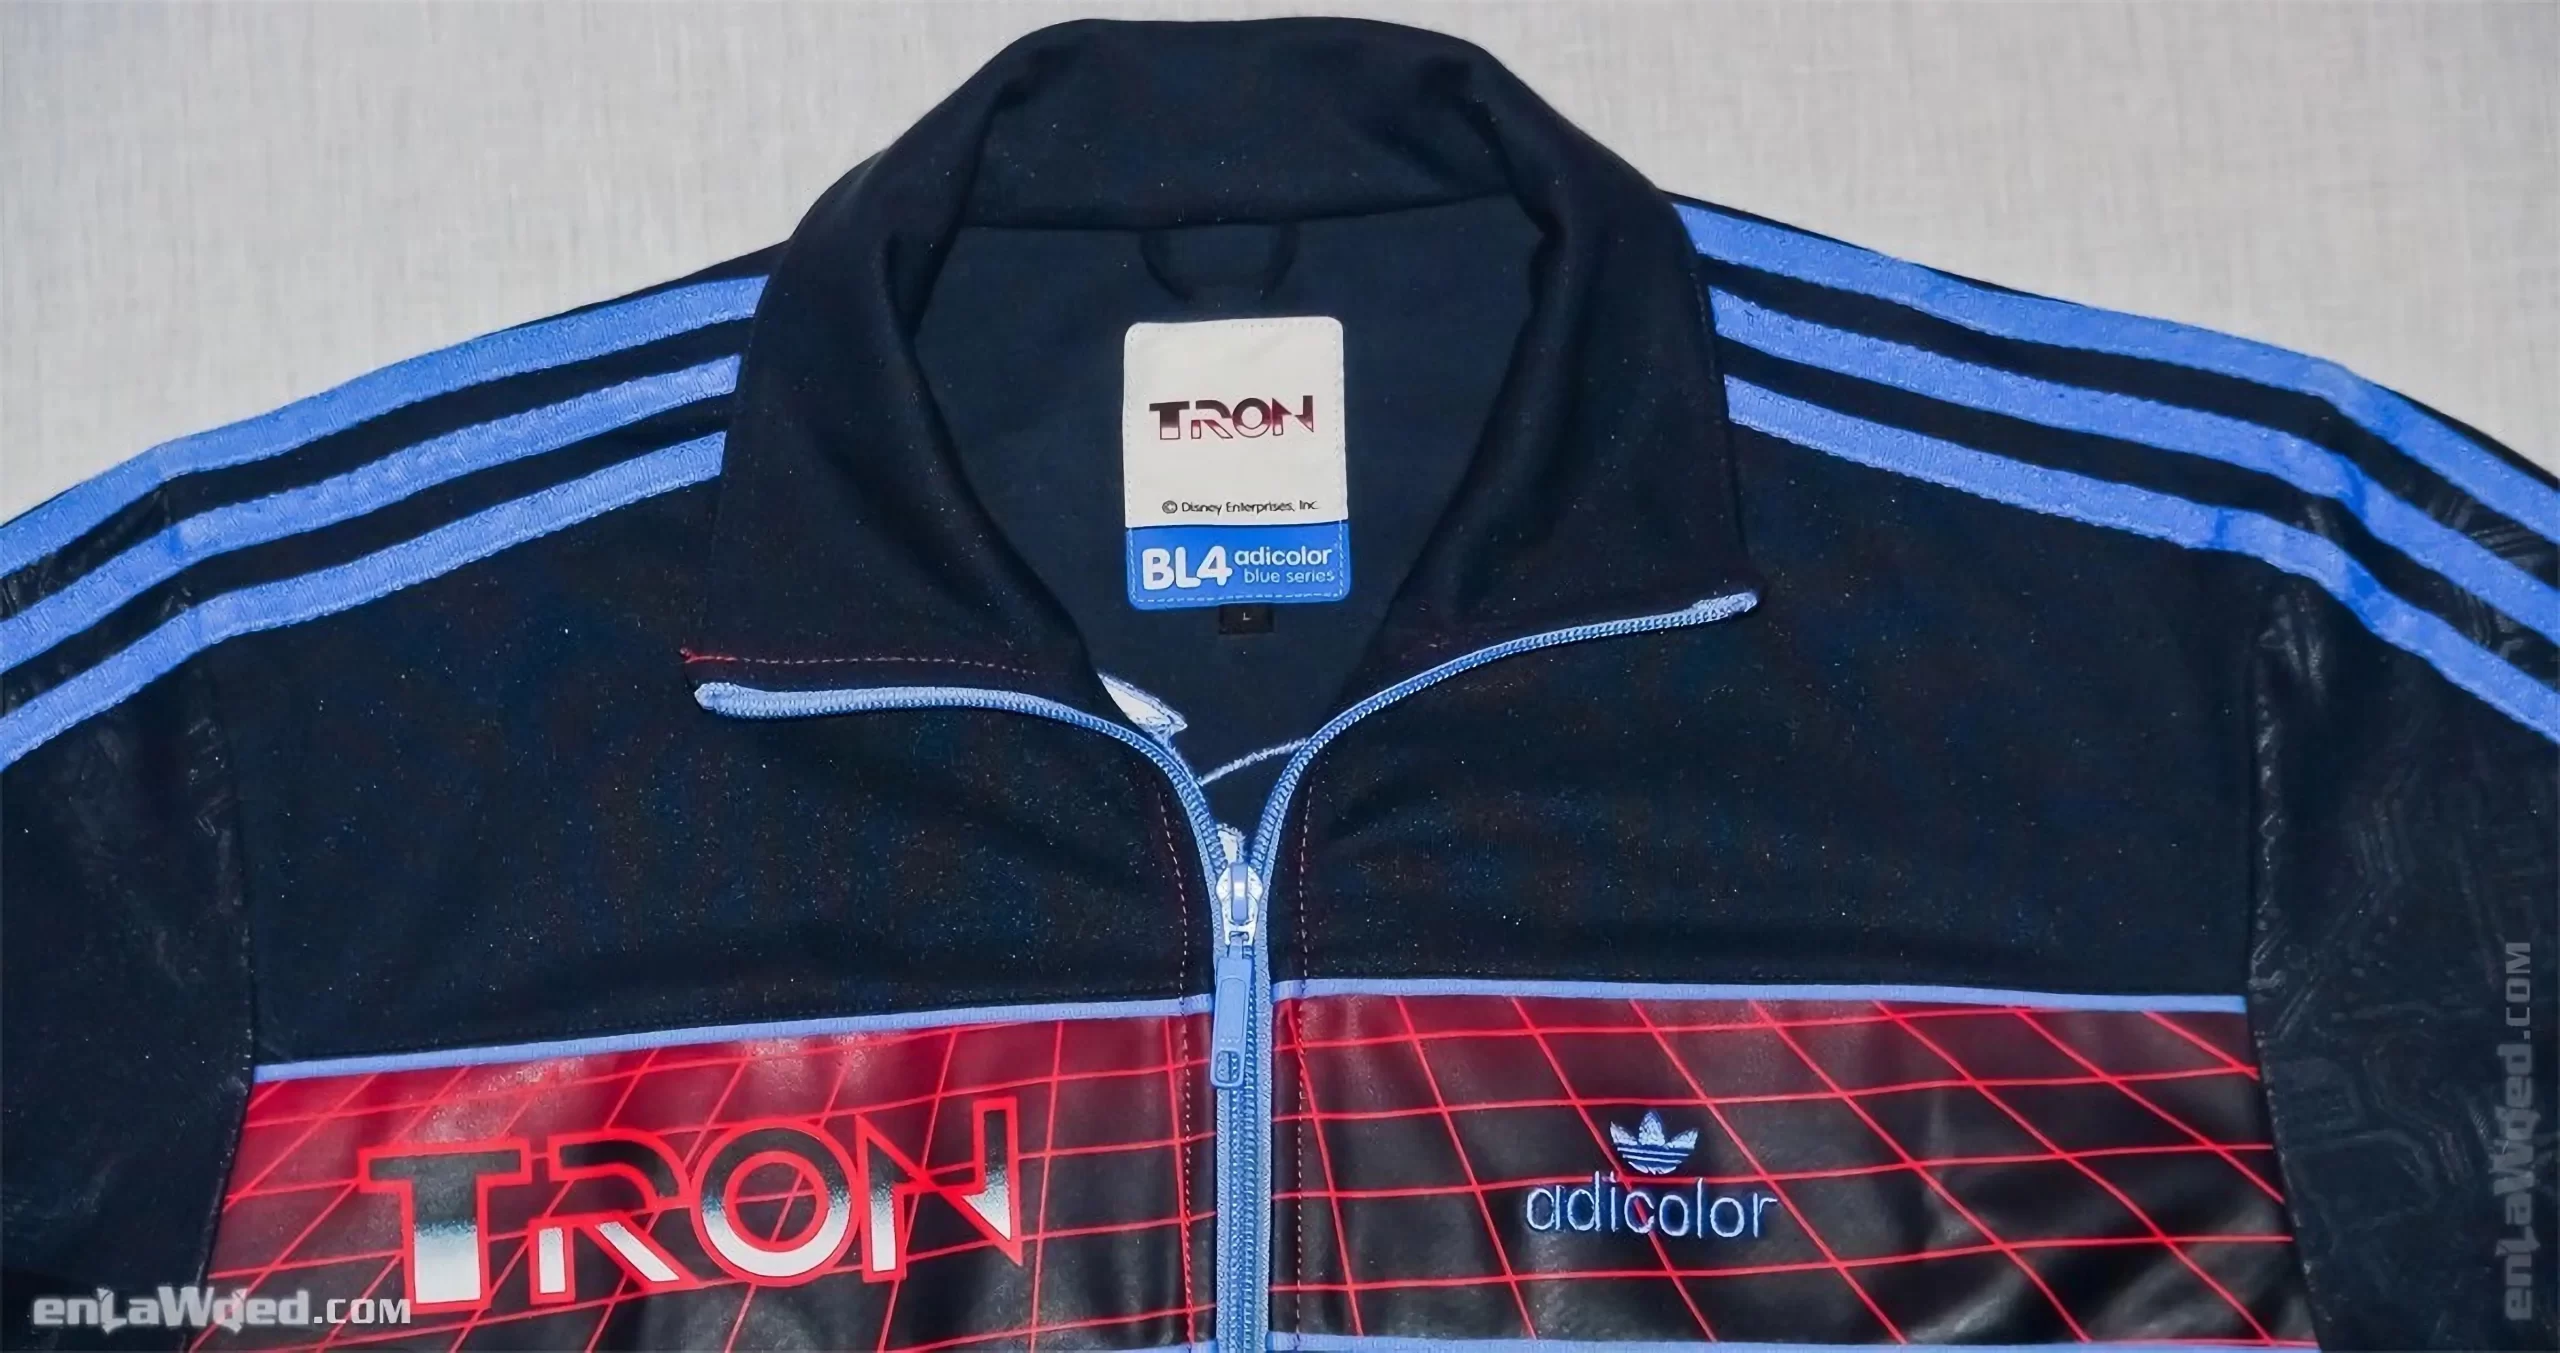 Men’s 2006 Adicolor BL4 Tron TT by Adidas Originals: Gift (EnLawded.com file #lmcfonyuq9rg6fd6z3c)